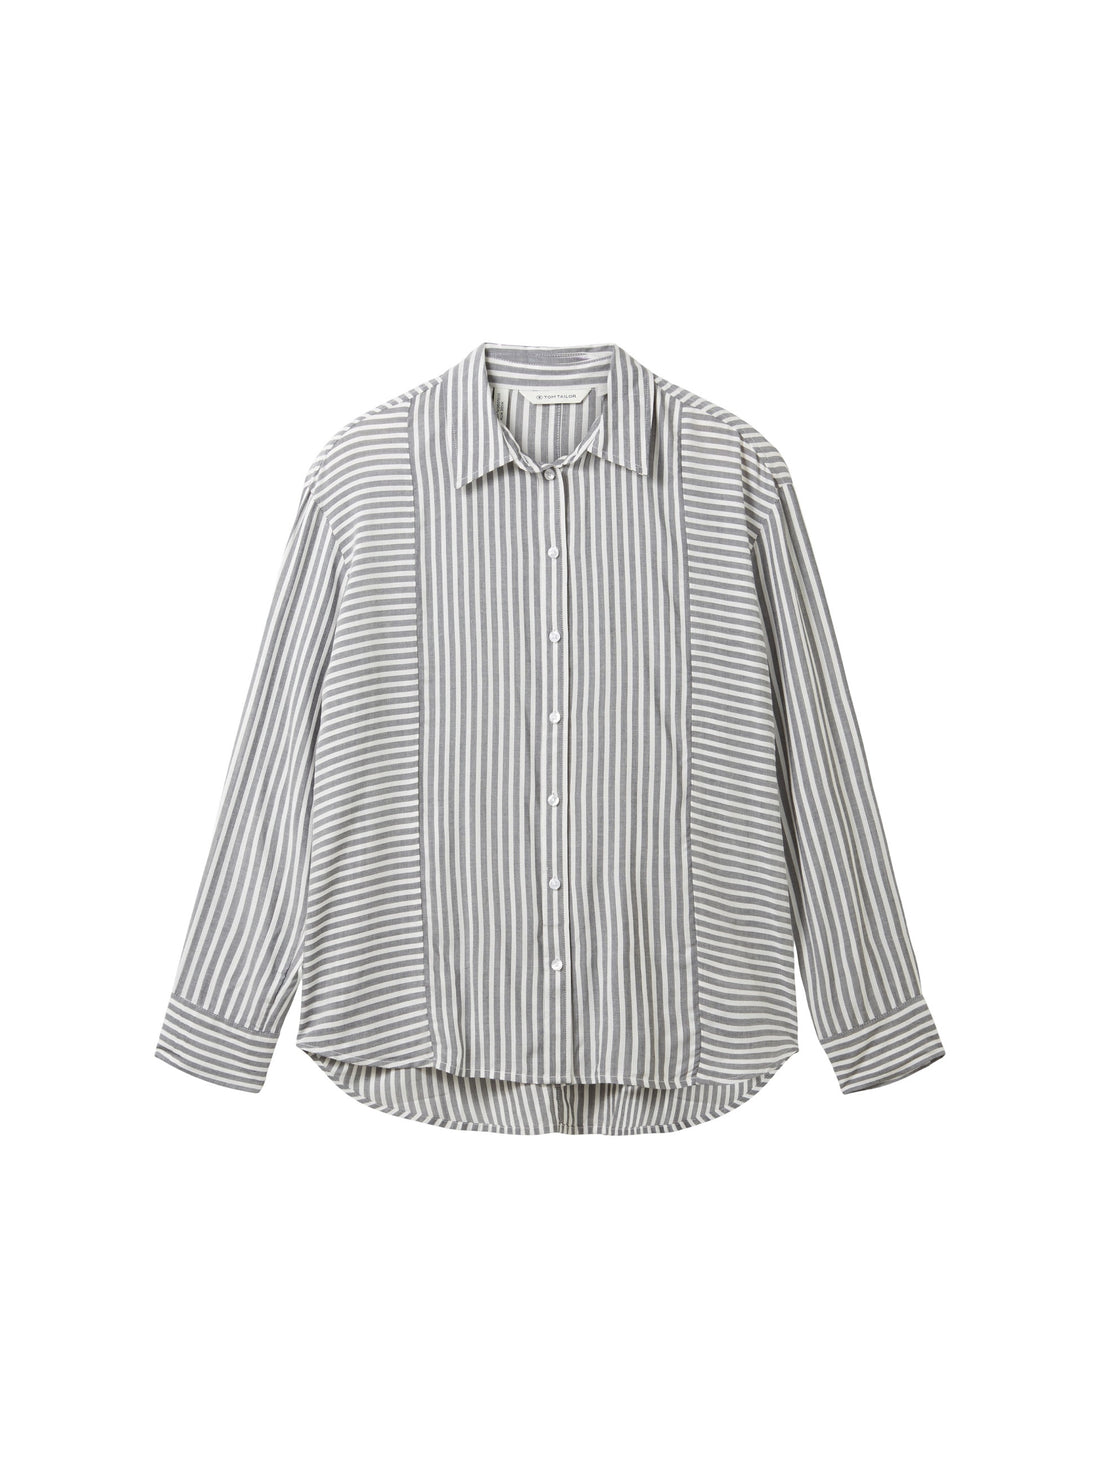 Shirt With Stripe Design_1037894_32595_01